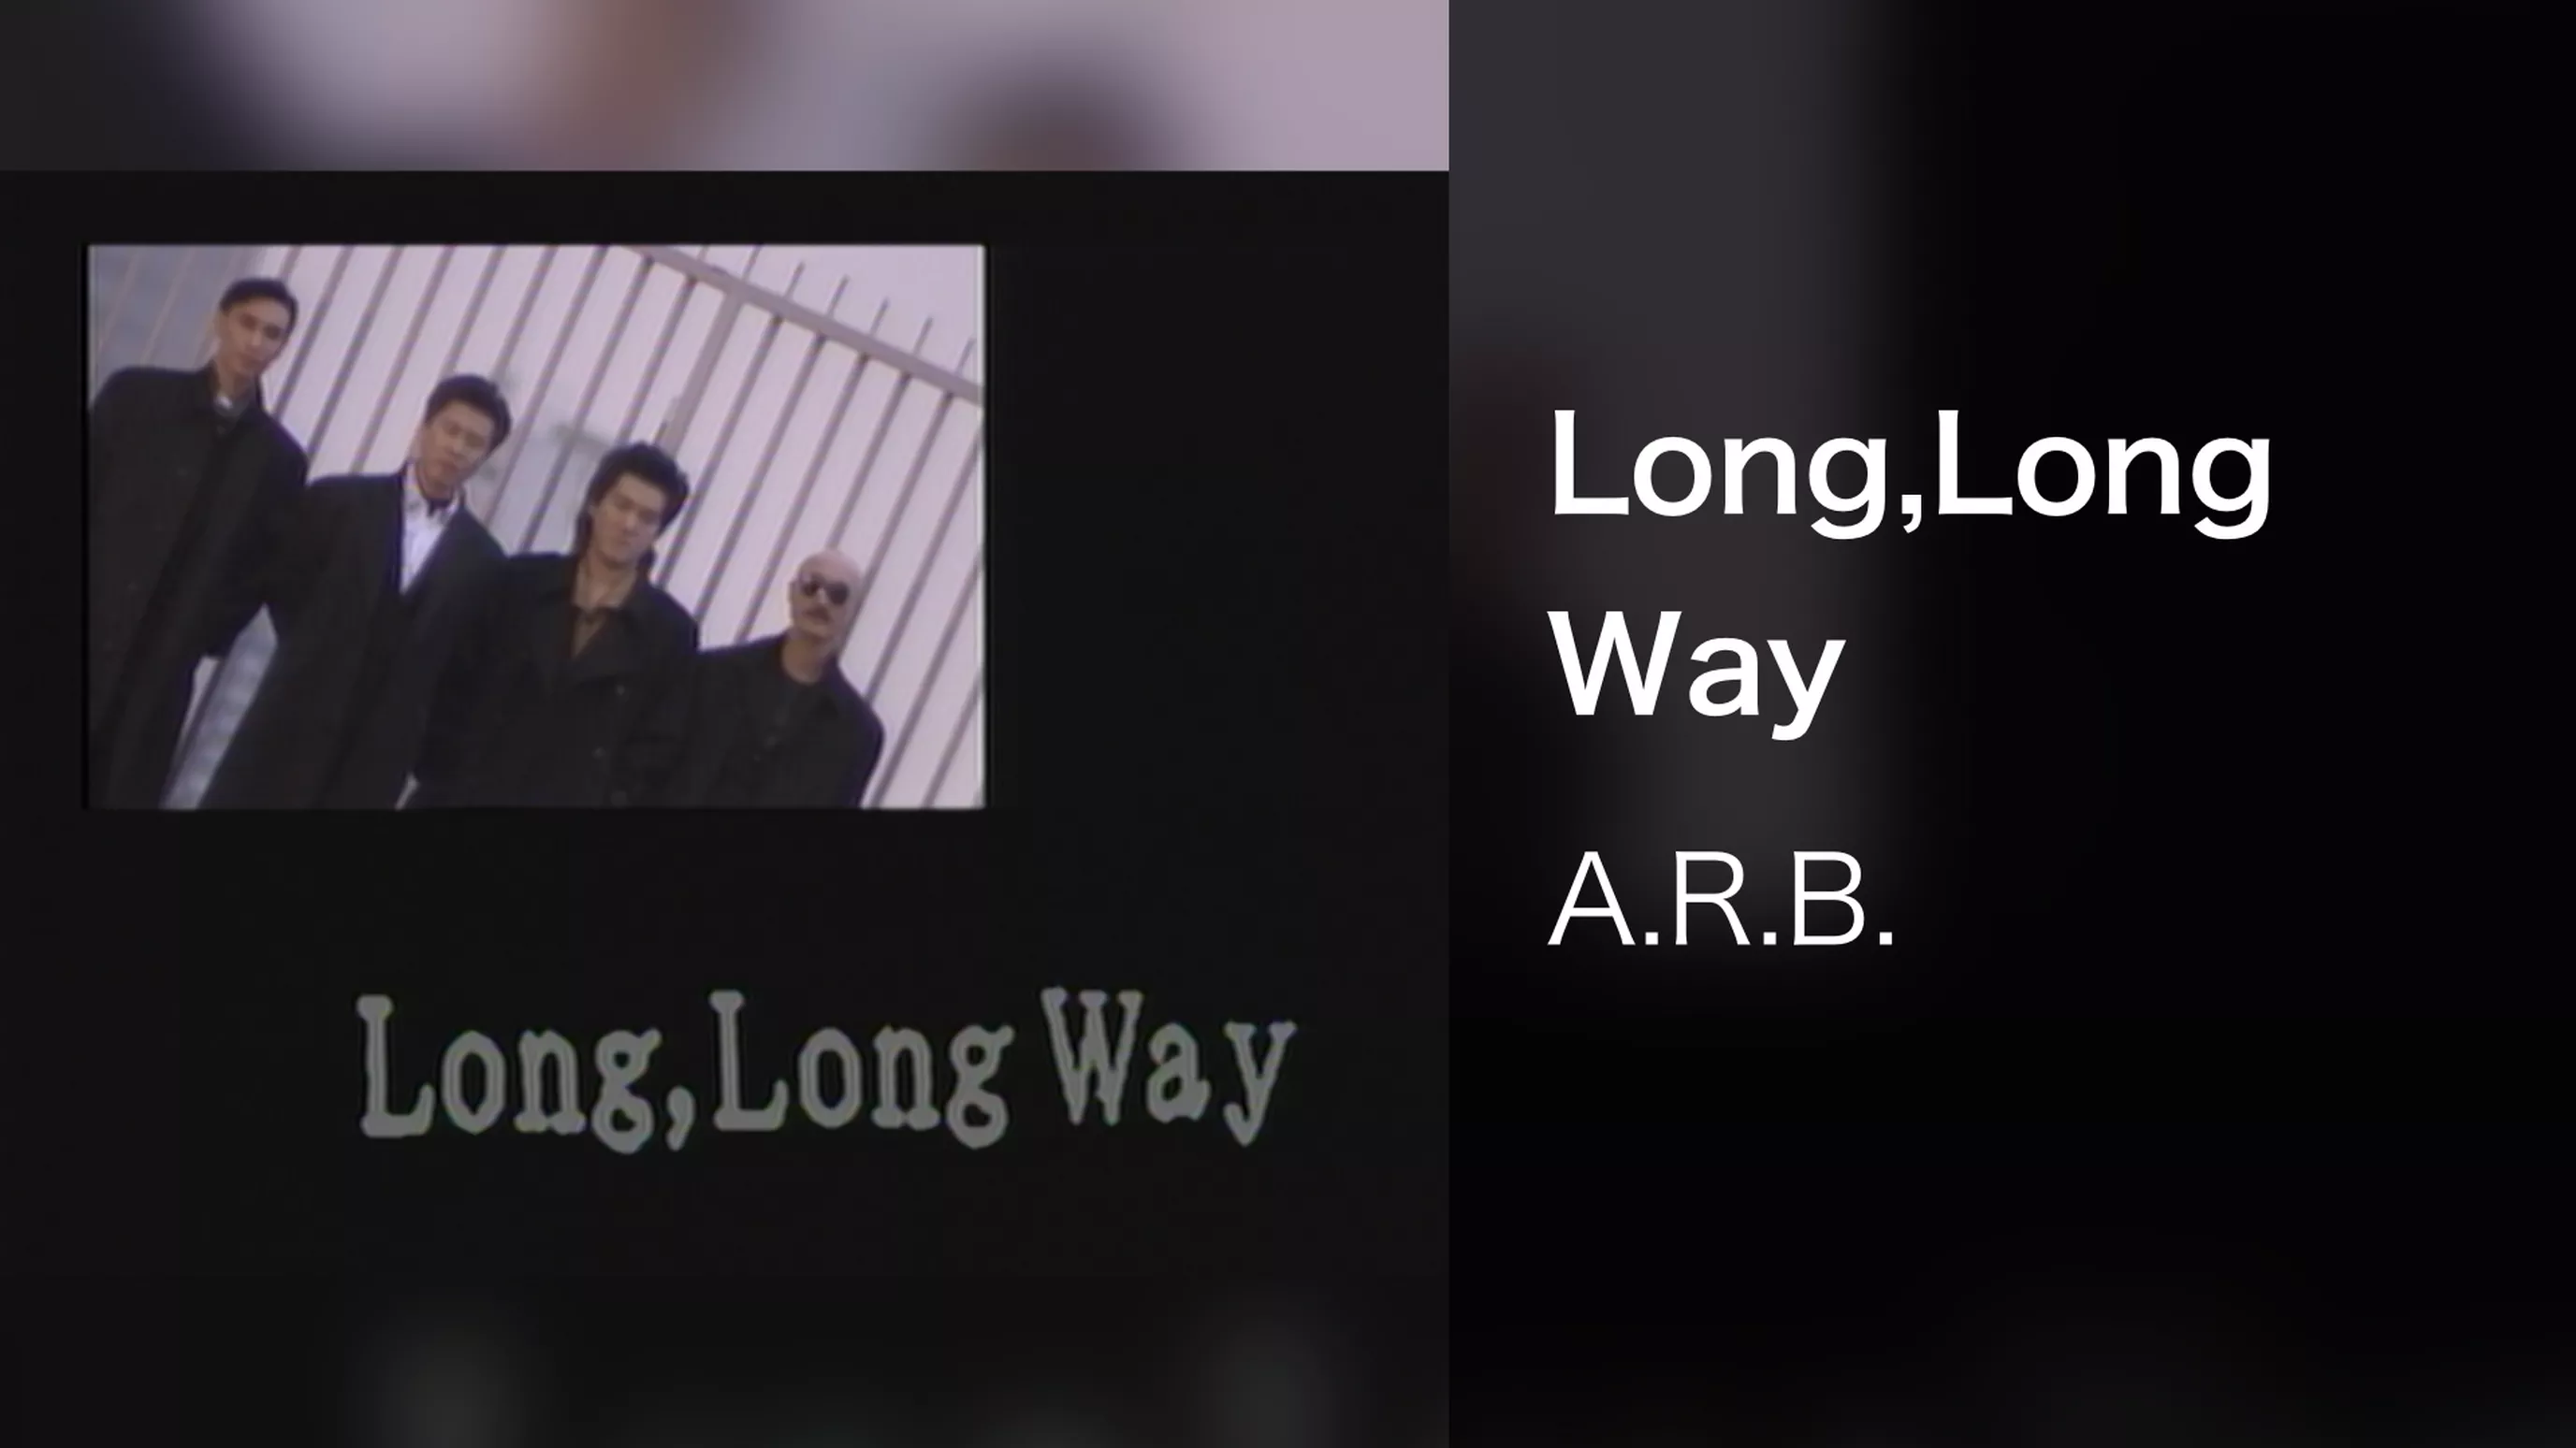 Long,Long Way